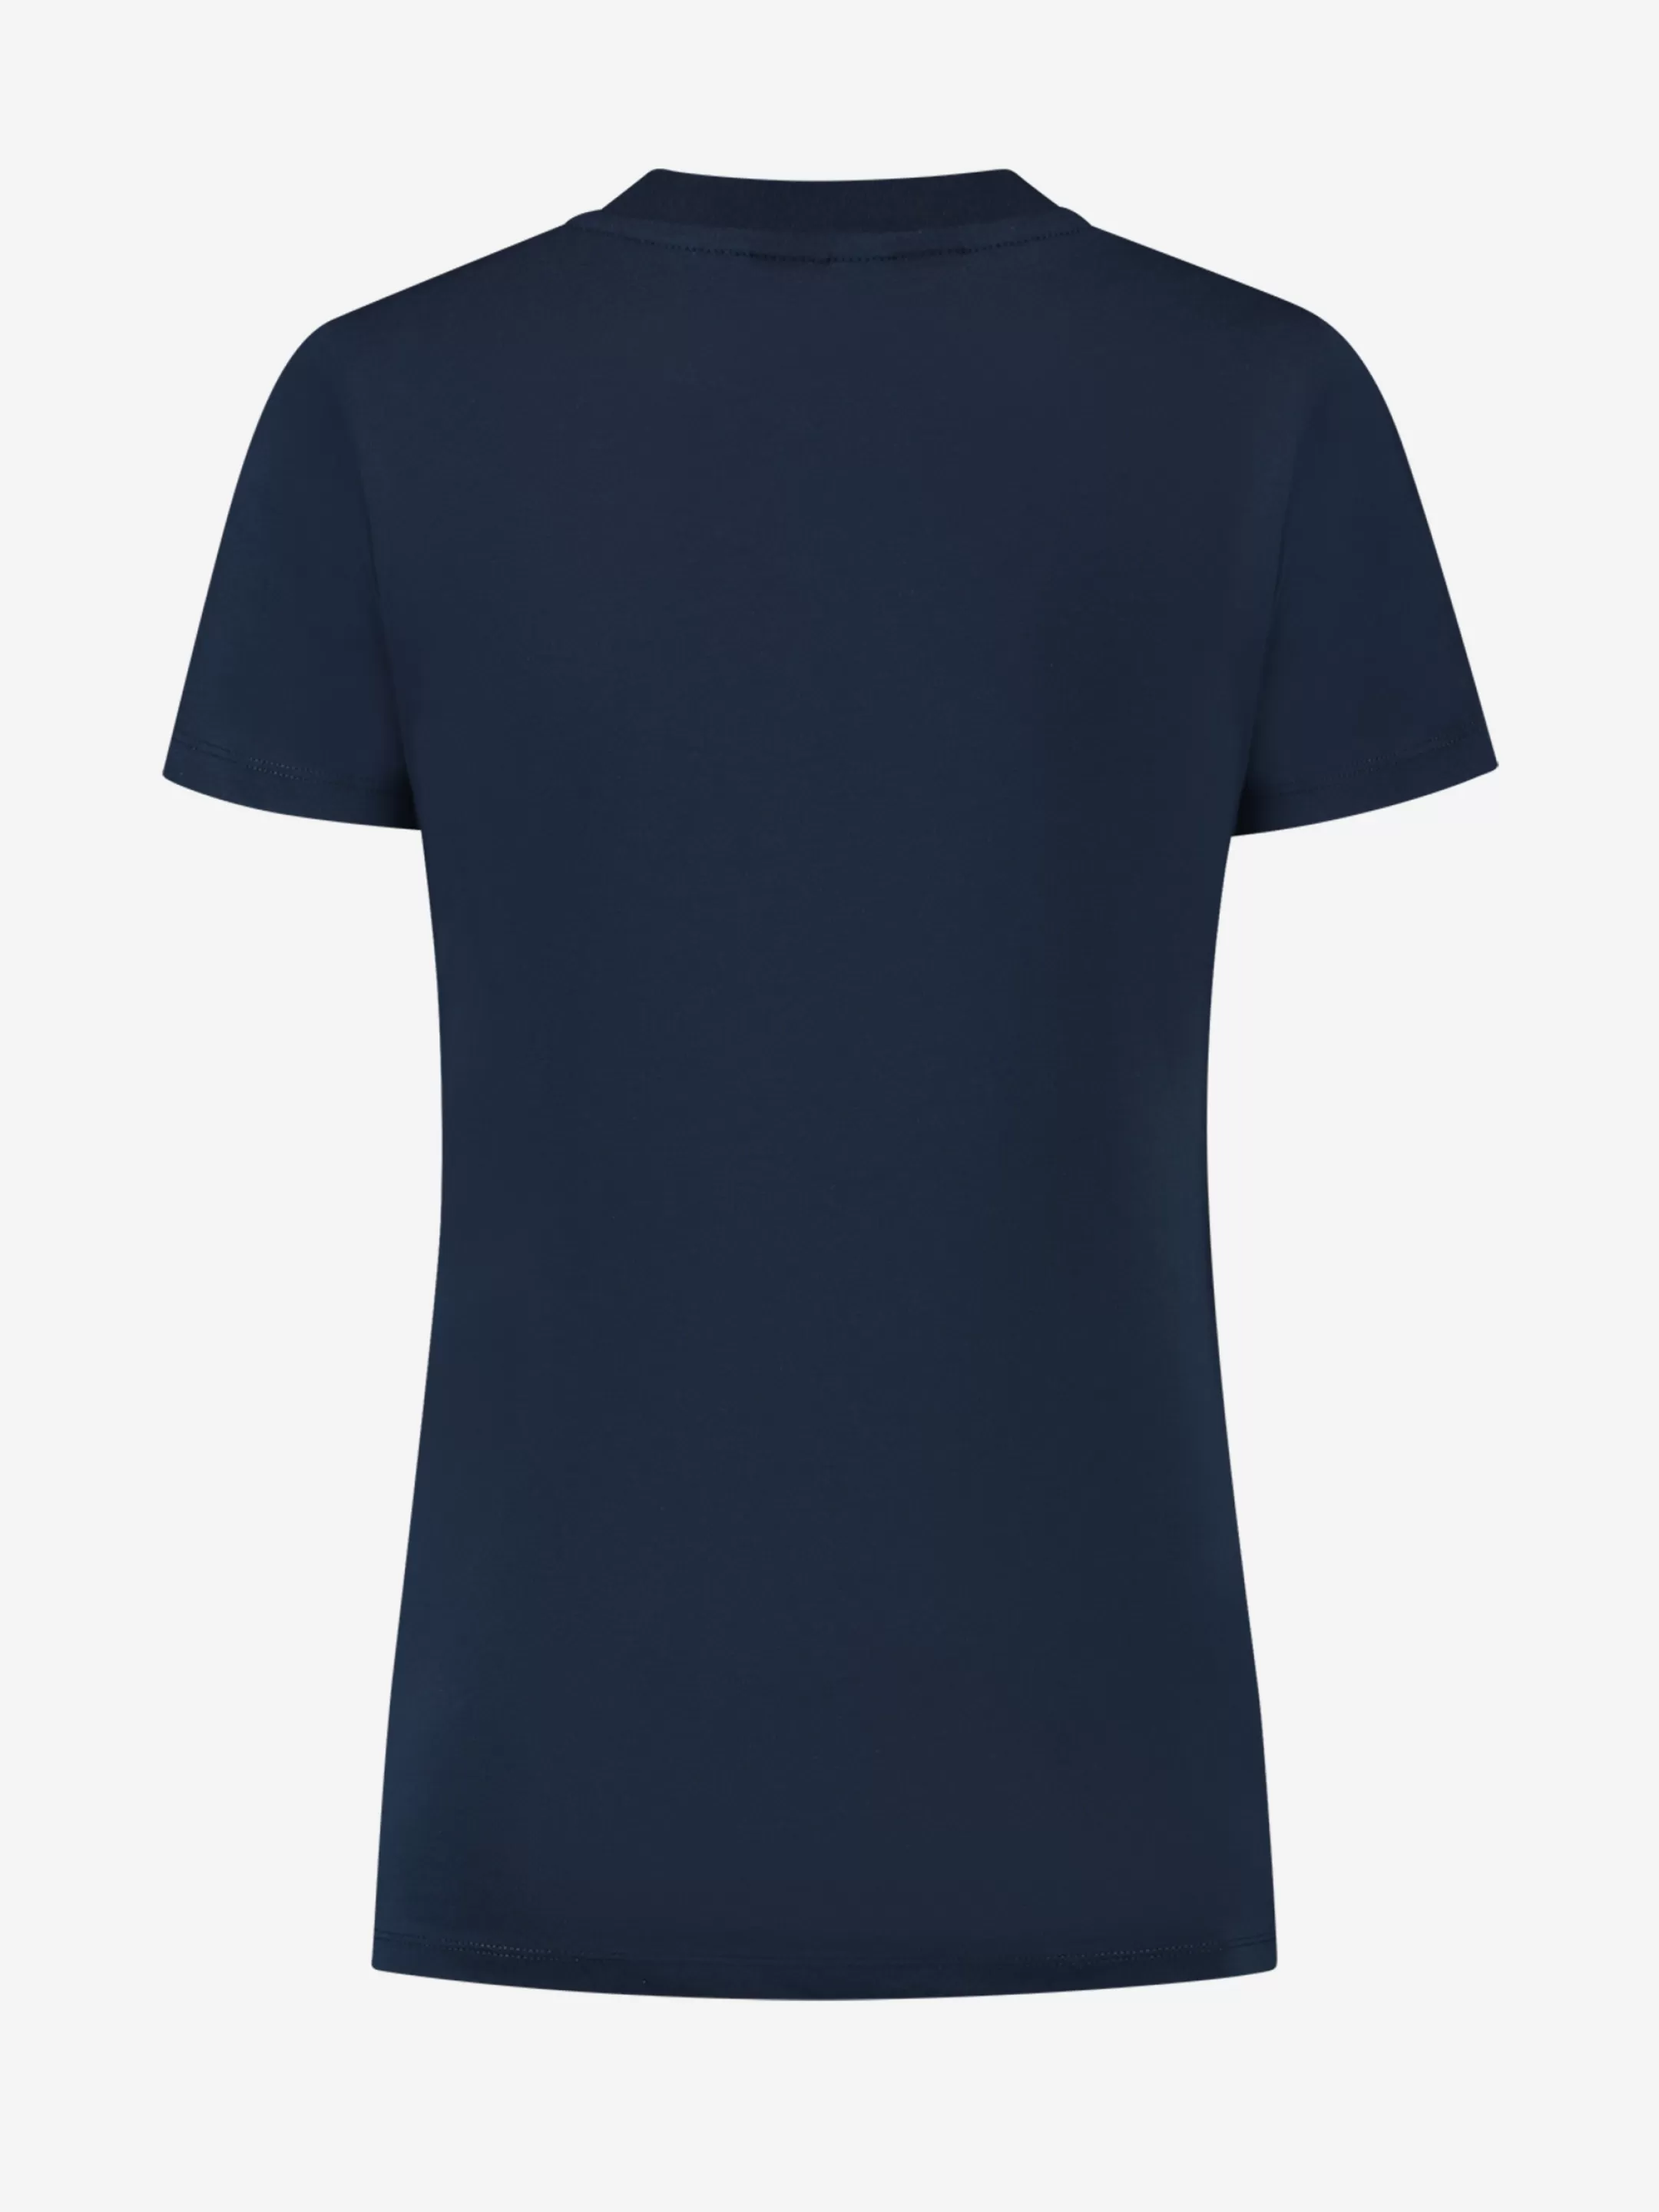 Cheap T-SHIRT MET GLIMMEND ARTWORK Shirts | T-shirts